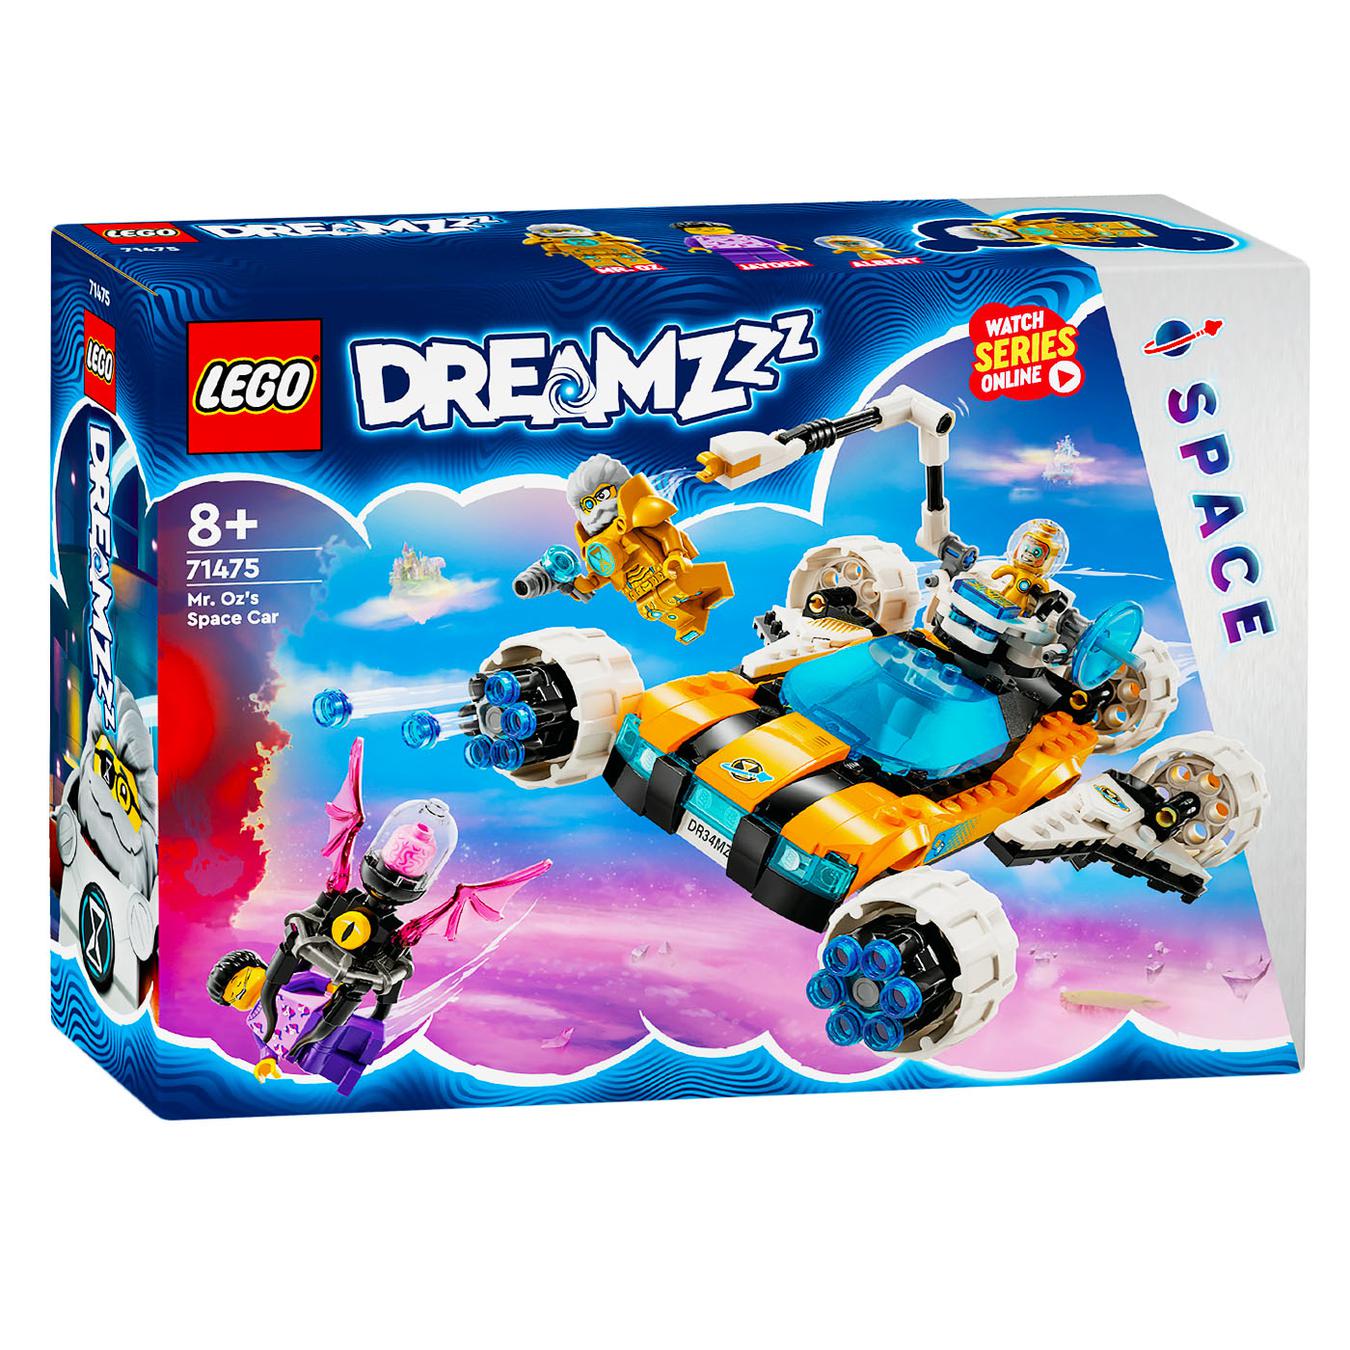 Constructor LEGO Dreamzzz 71475 Space car of Mr. Oz